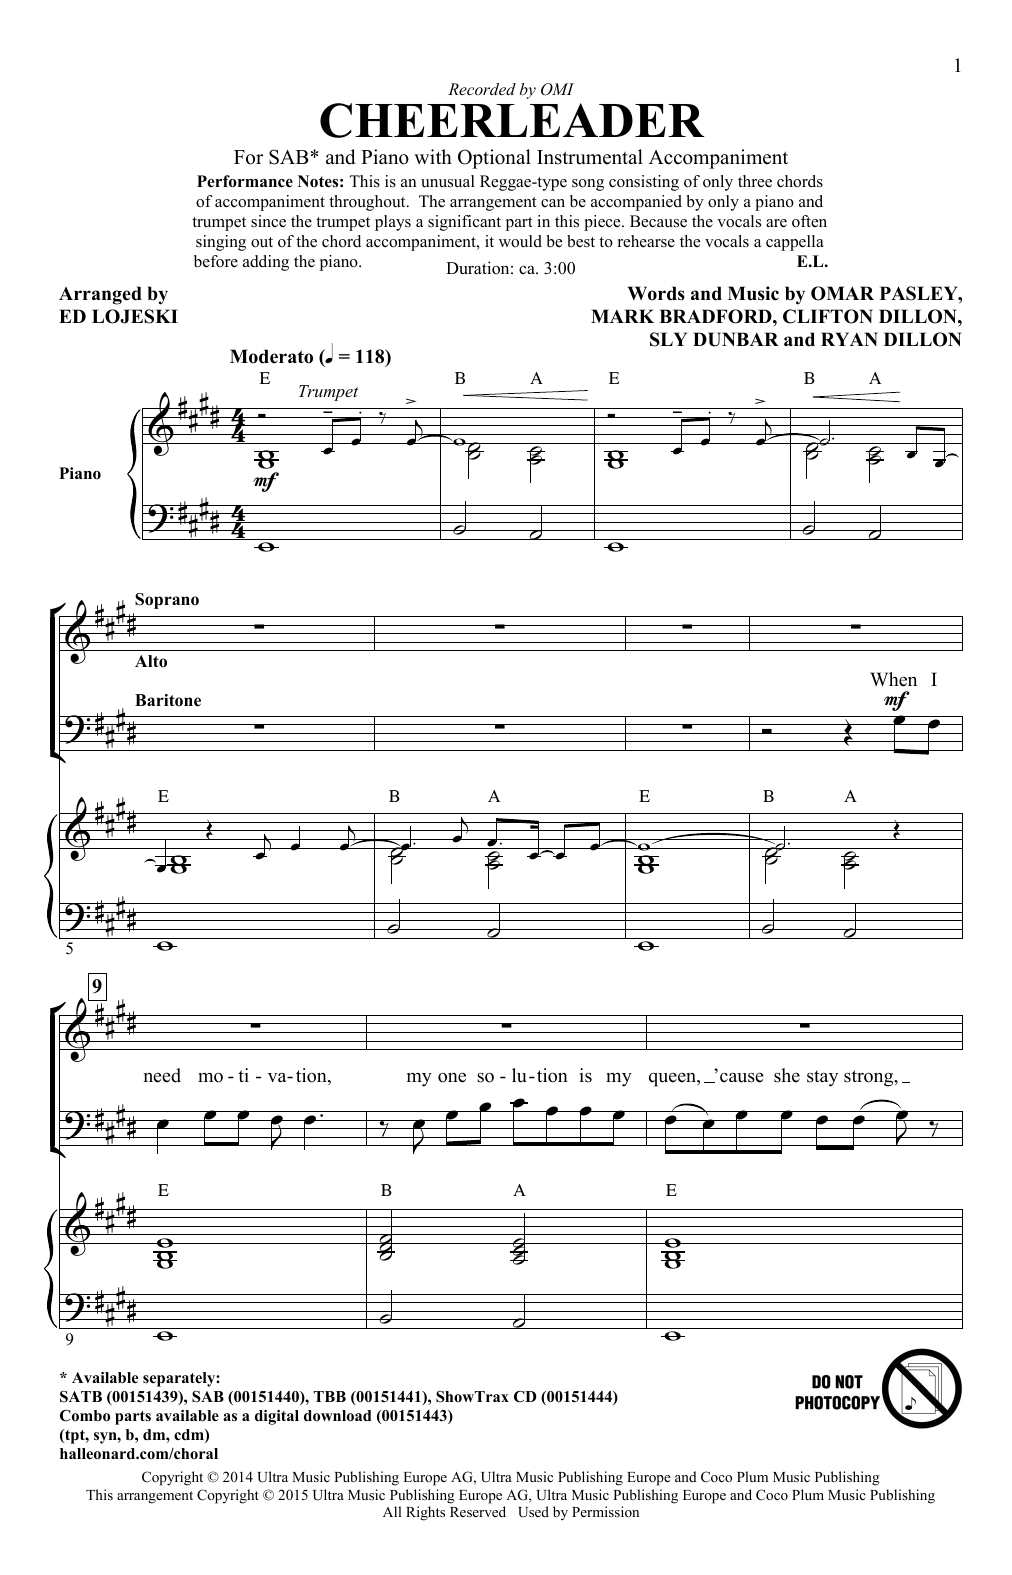 Ed Lojeski Cheerleader Sheet Music Notes & Chords for TBB - Download or Print PDF